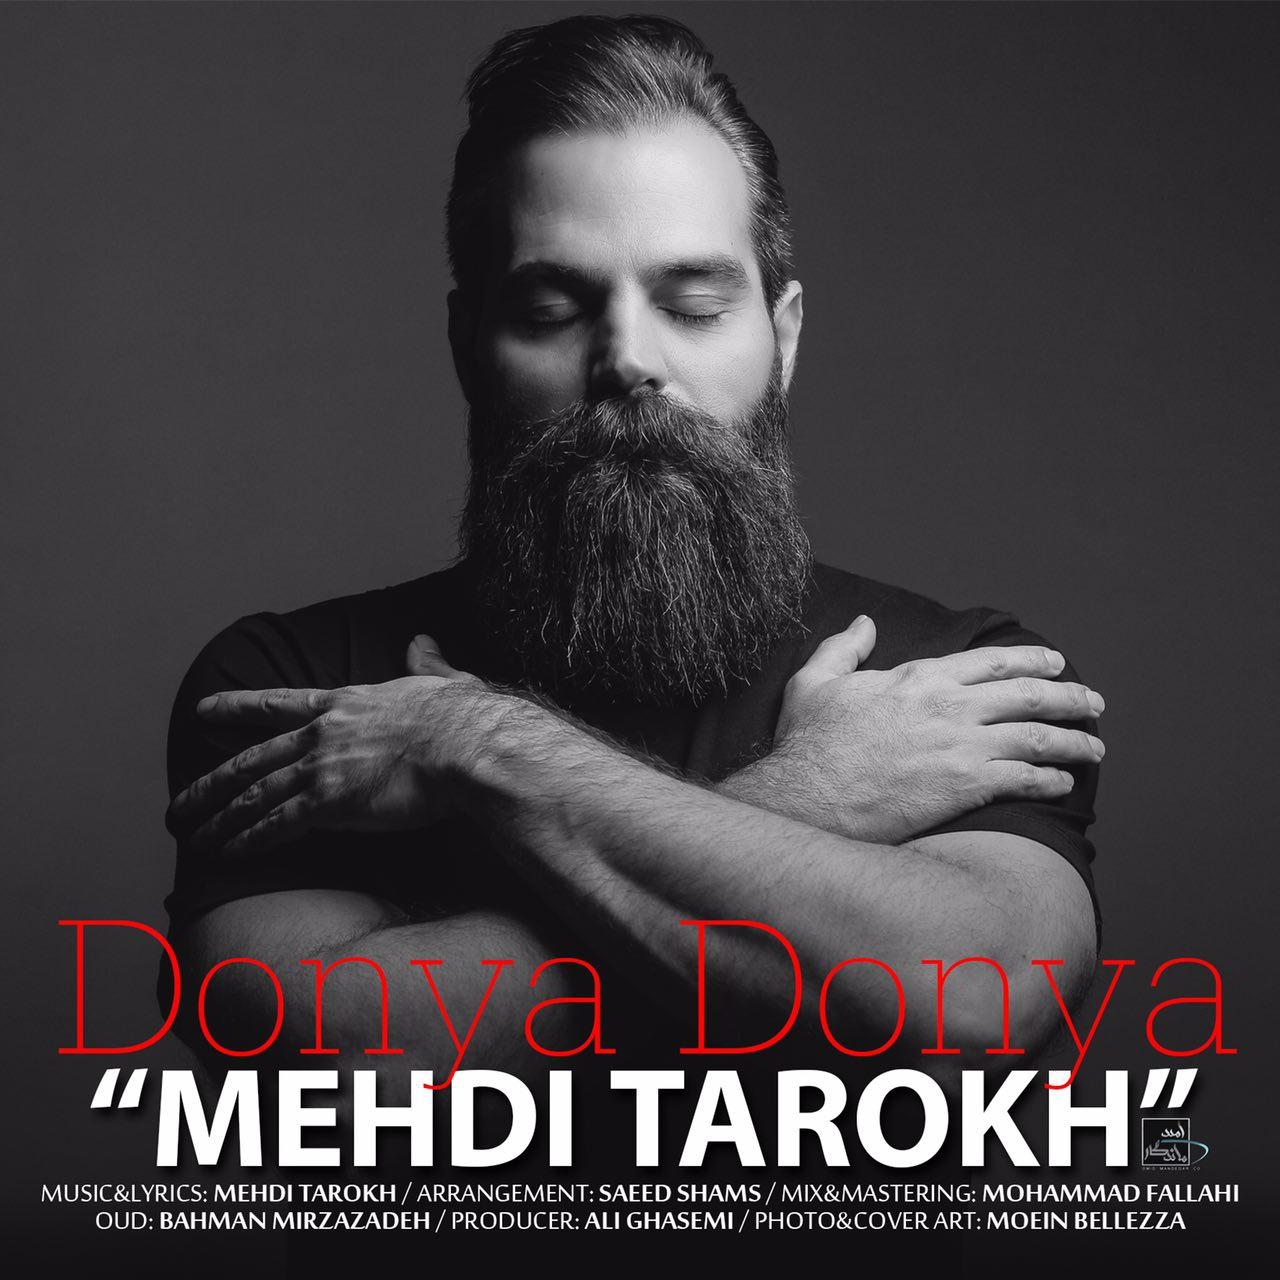  دانلود آهنگ جدید مهدی تارخ - دنیا دنیا | Download New Music By Mehdi Tarokh - Donya Donya